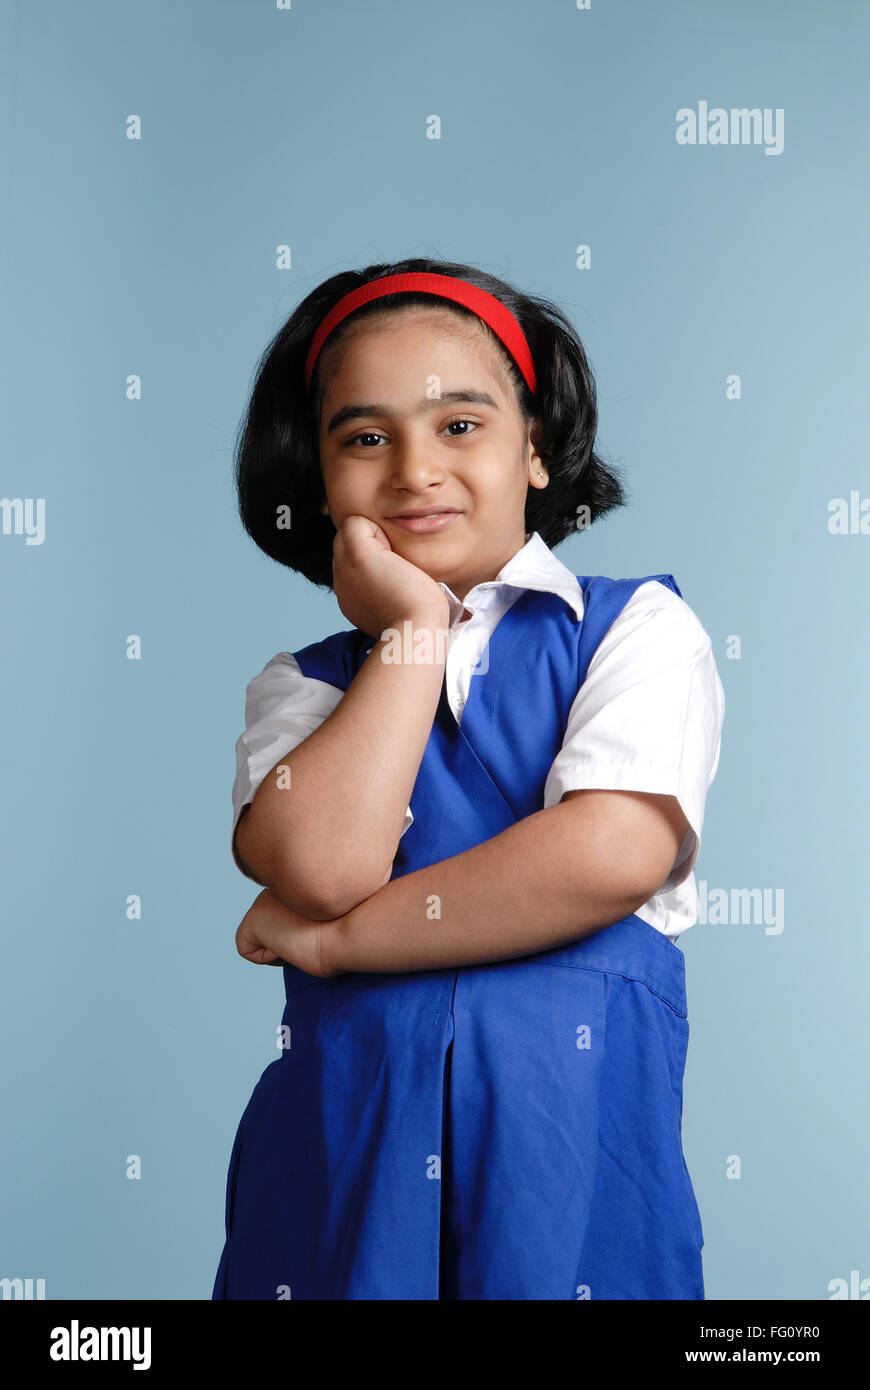 South Asian Indian girl in school uniform MR# 719B Stock Photo